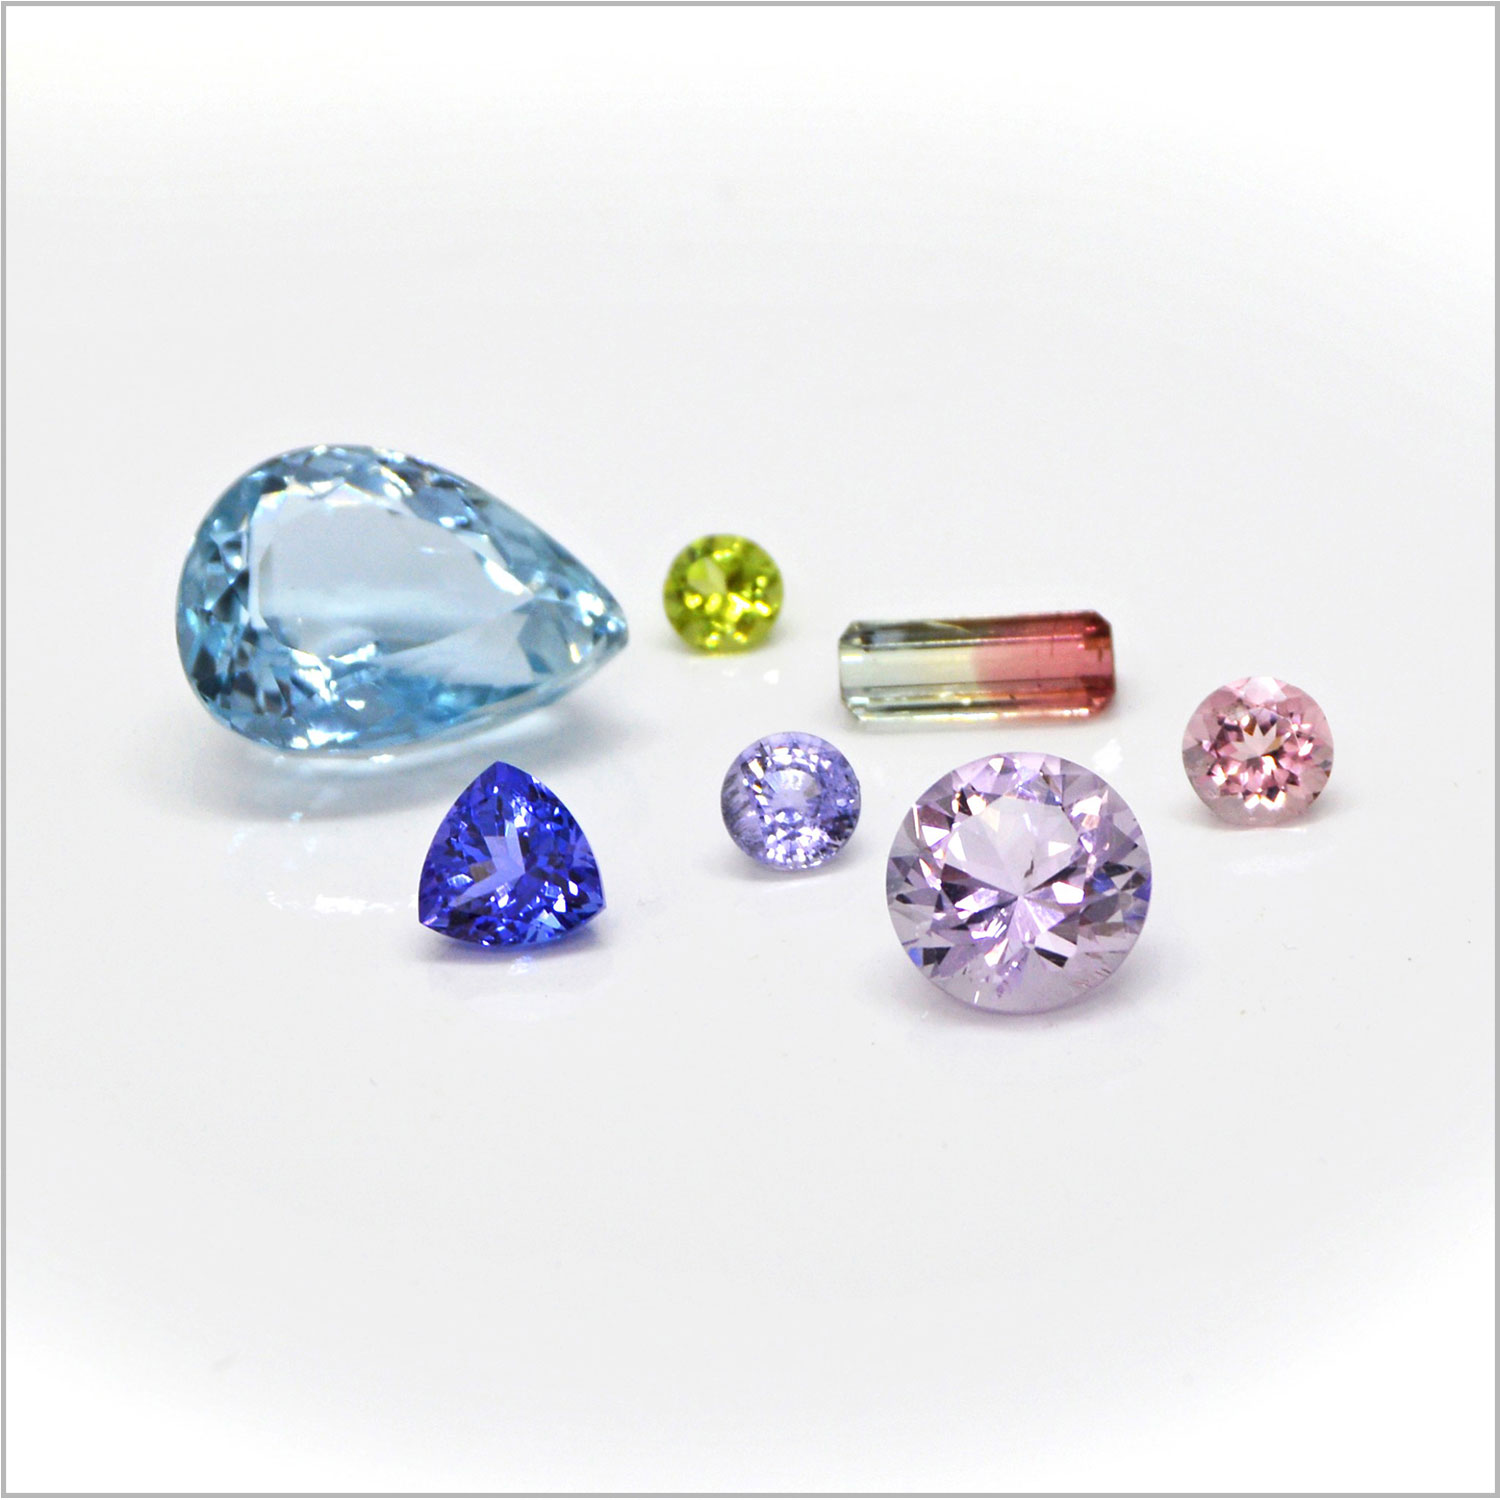 Assortment of colored faceted gemstones includinig pear-cut aquamarine, trillion-cut tanzanite, baguette bicolor tourmaline, and round rose quartz, pink and lavender sapphires and peridot